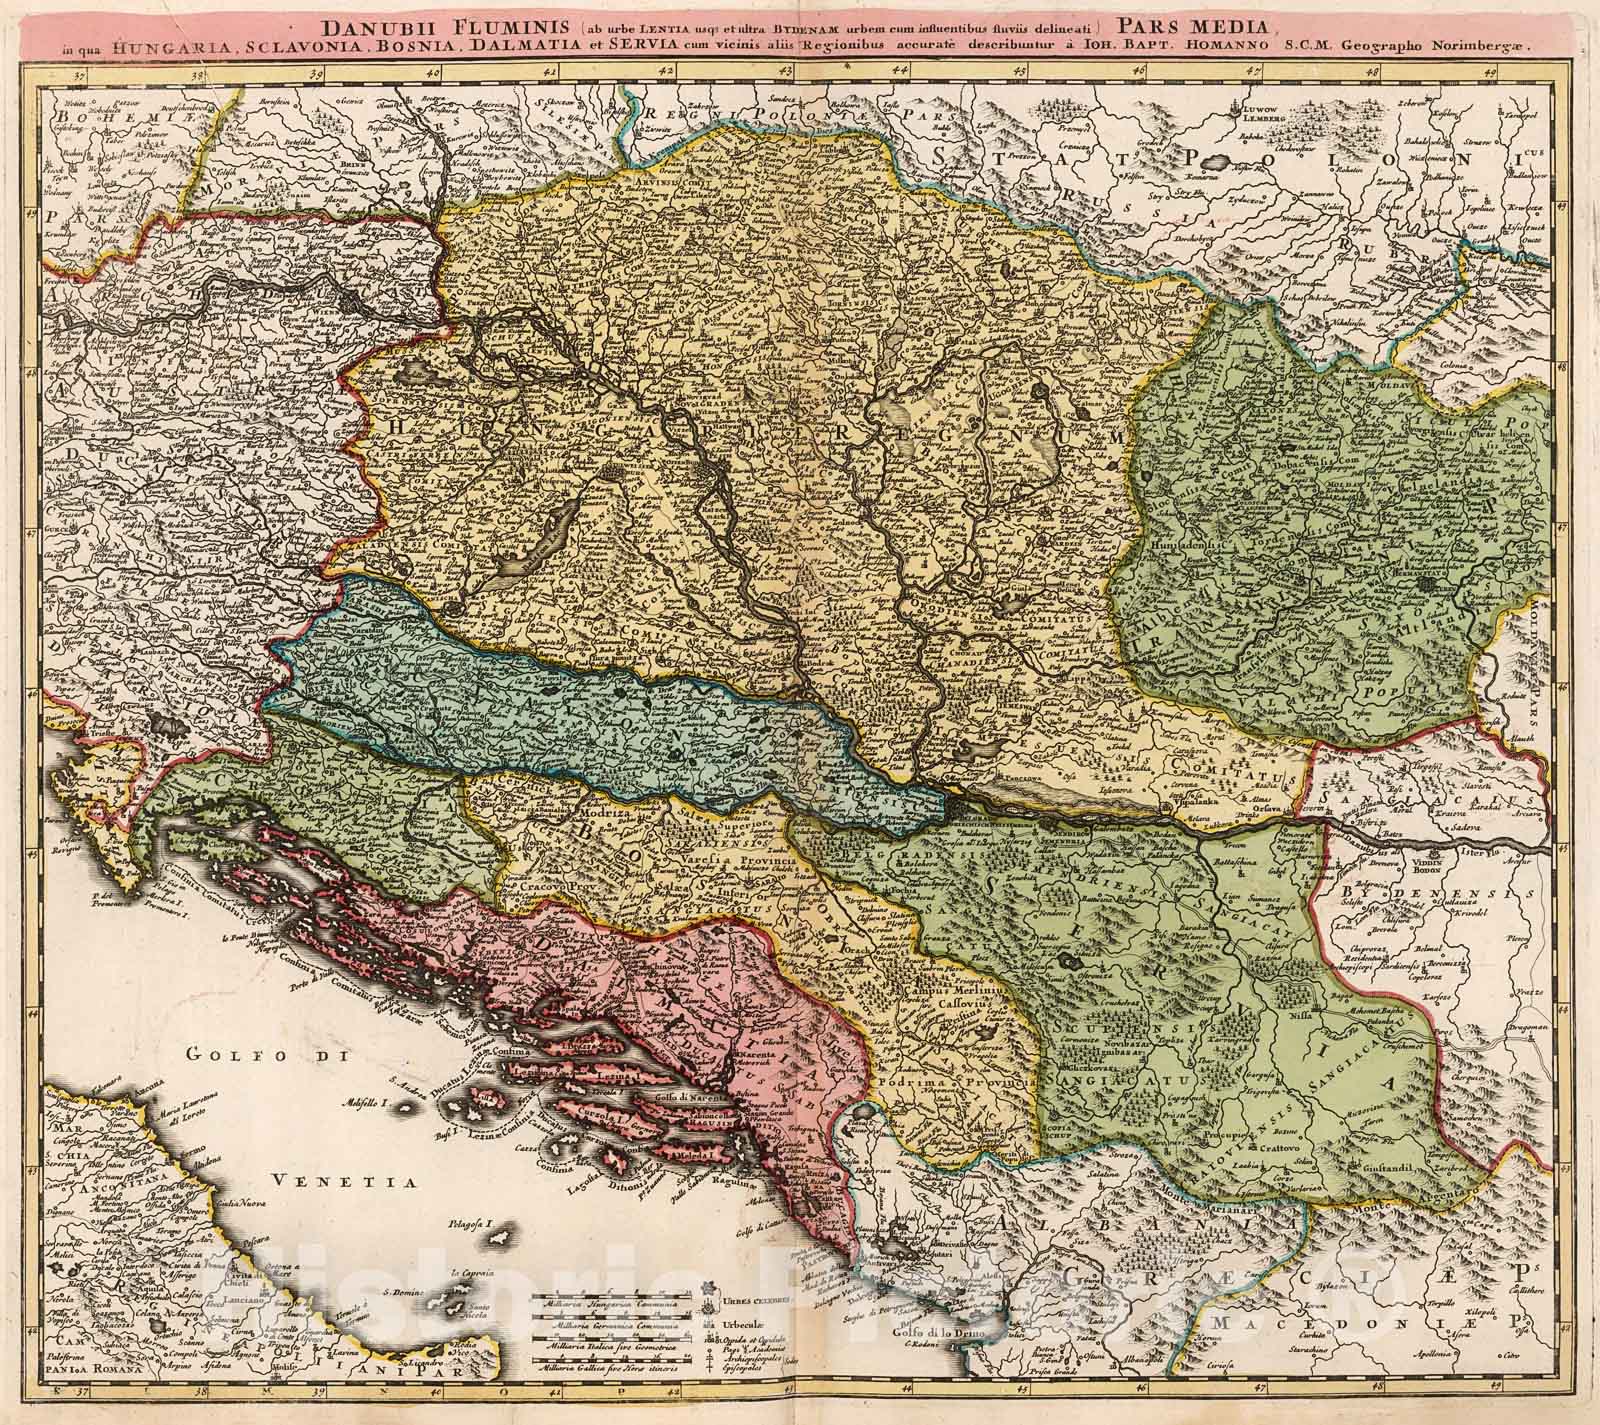 Historic Map : Danubii Fluminis ... Pars Media., 1716, Vintage Wall Decor